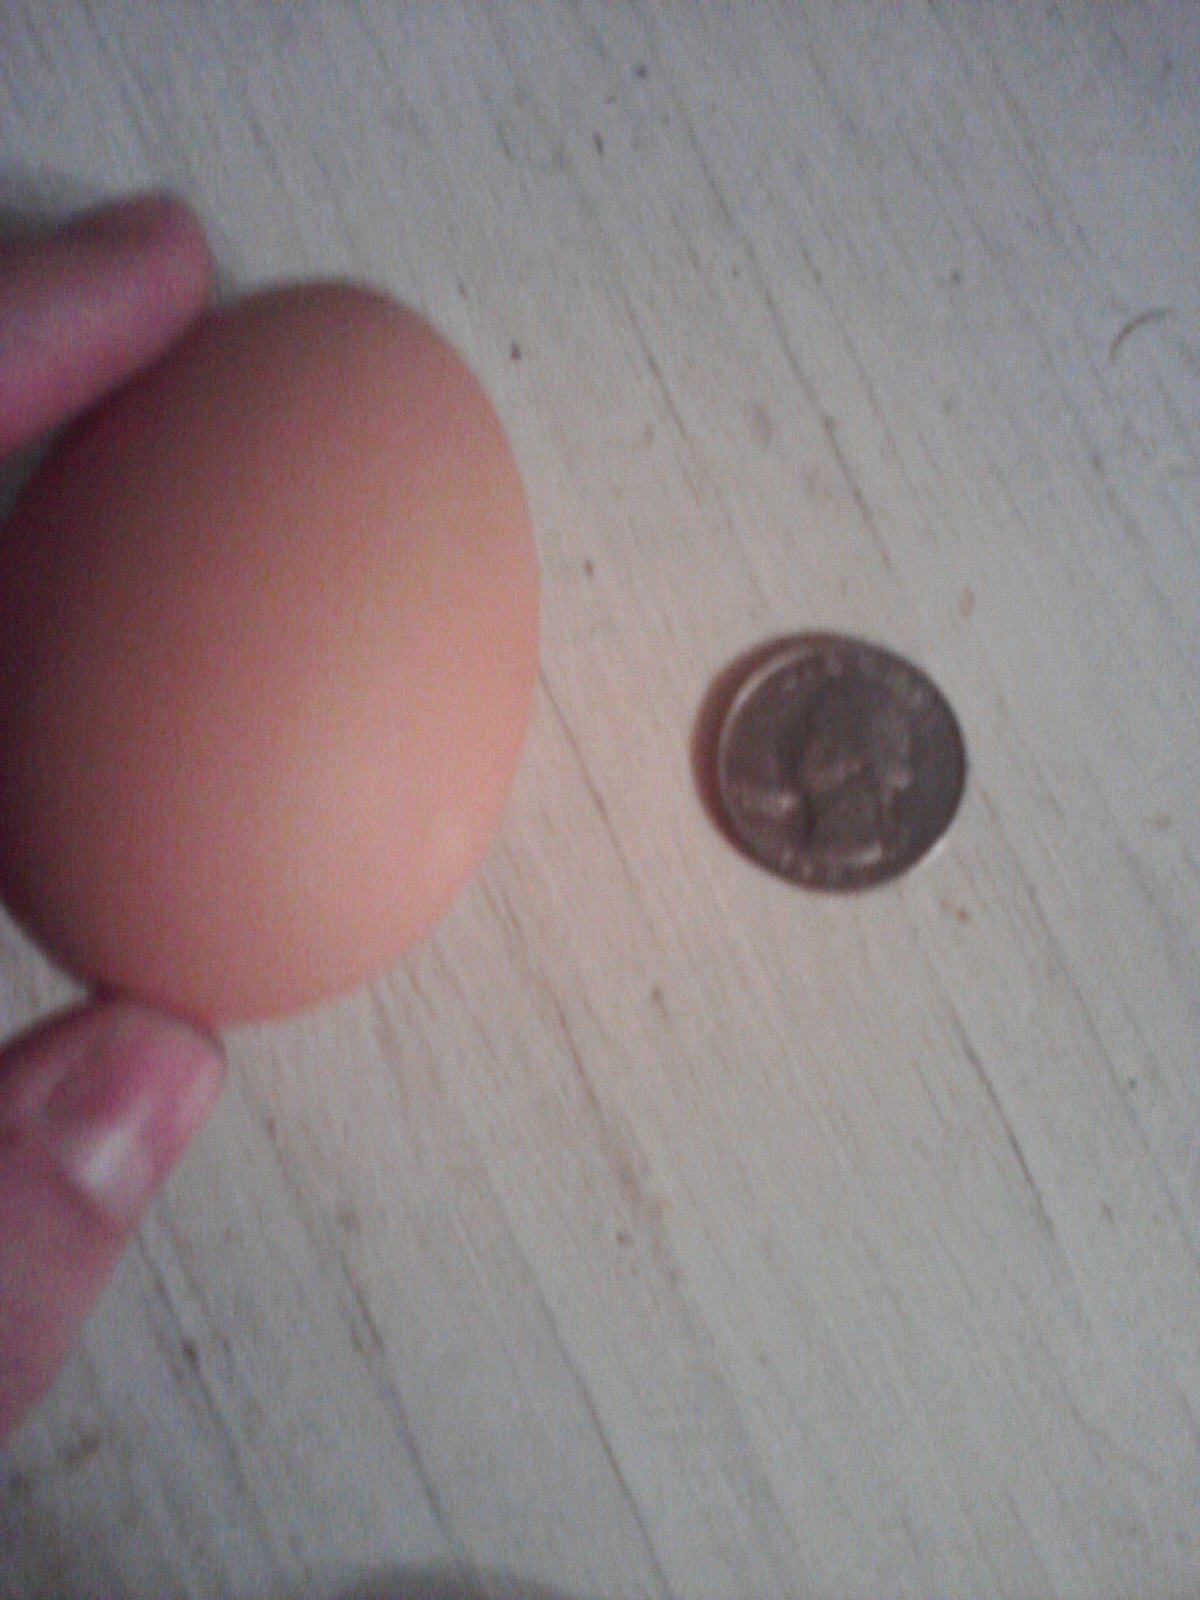 A large egg